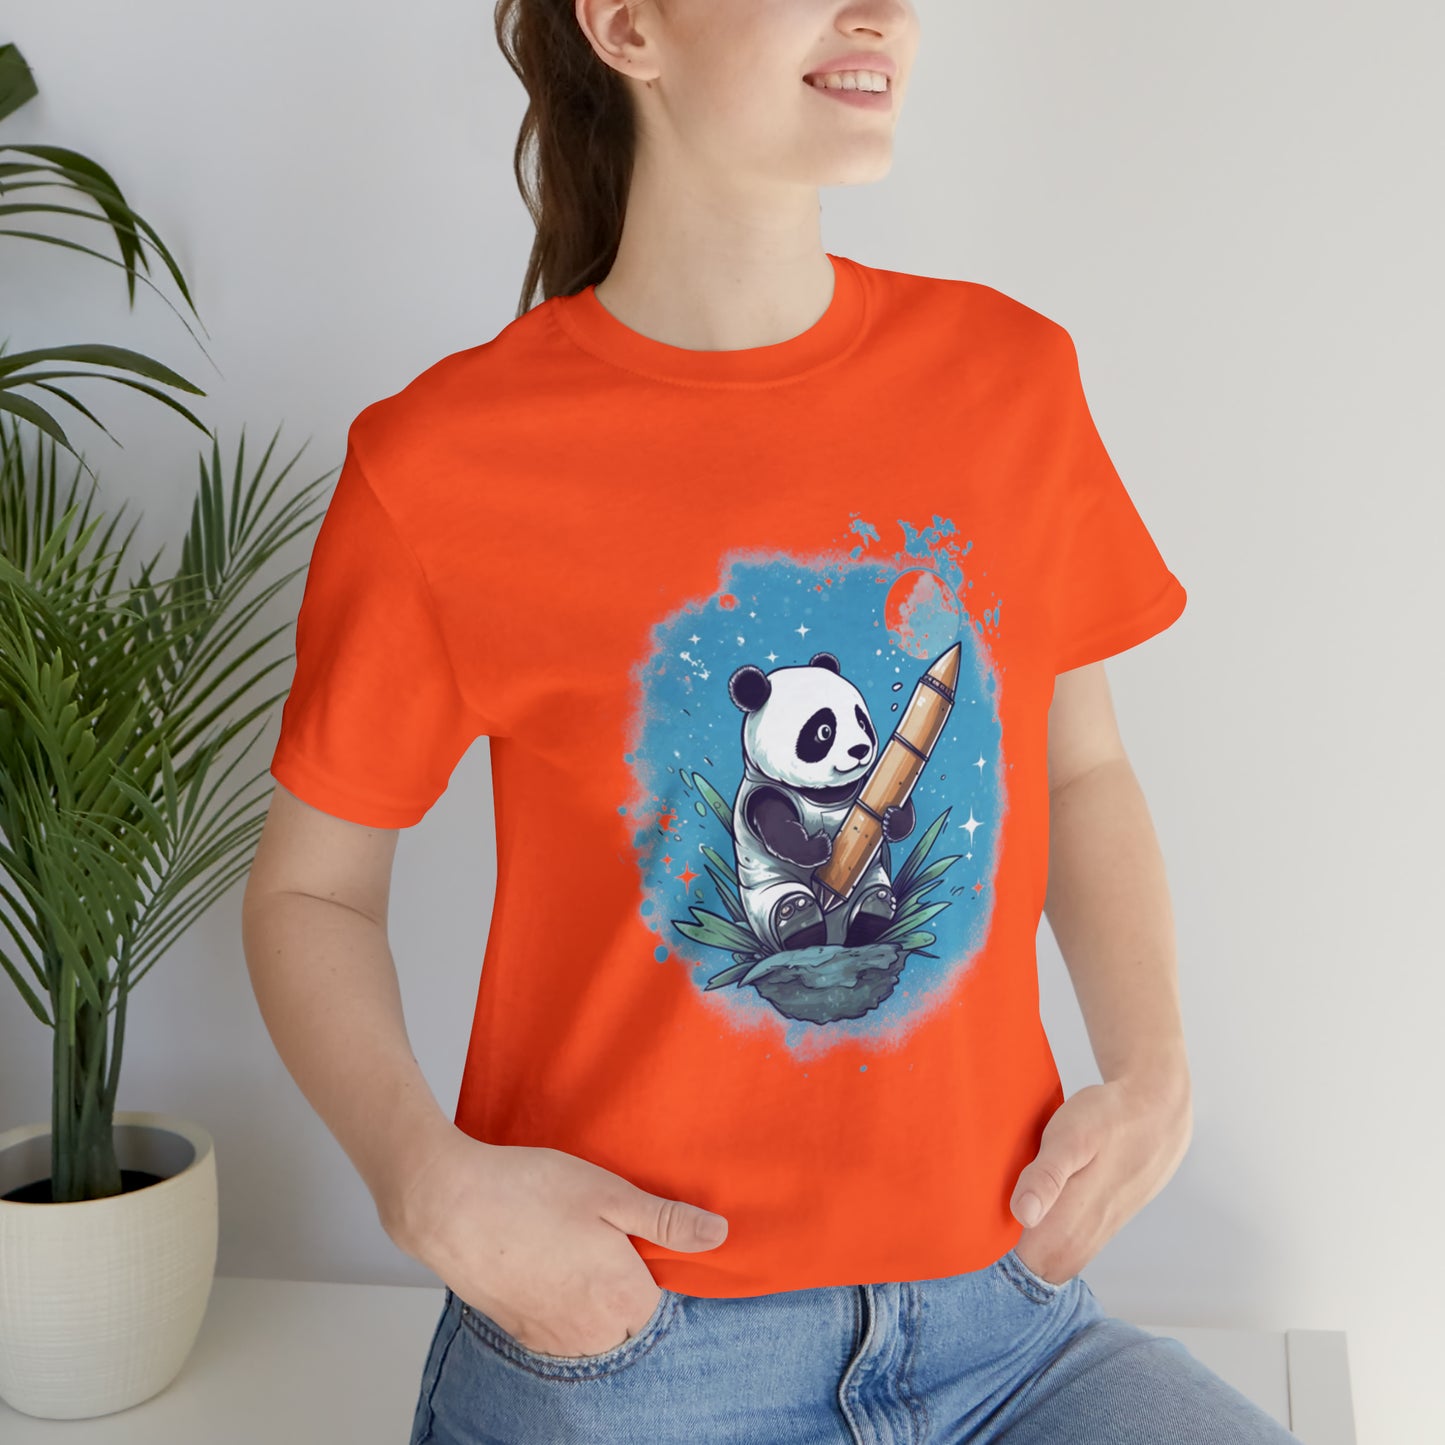 Panda in Space: A celestial comic adventure!